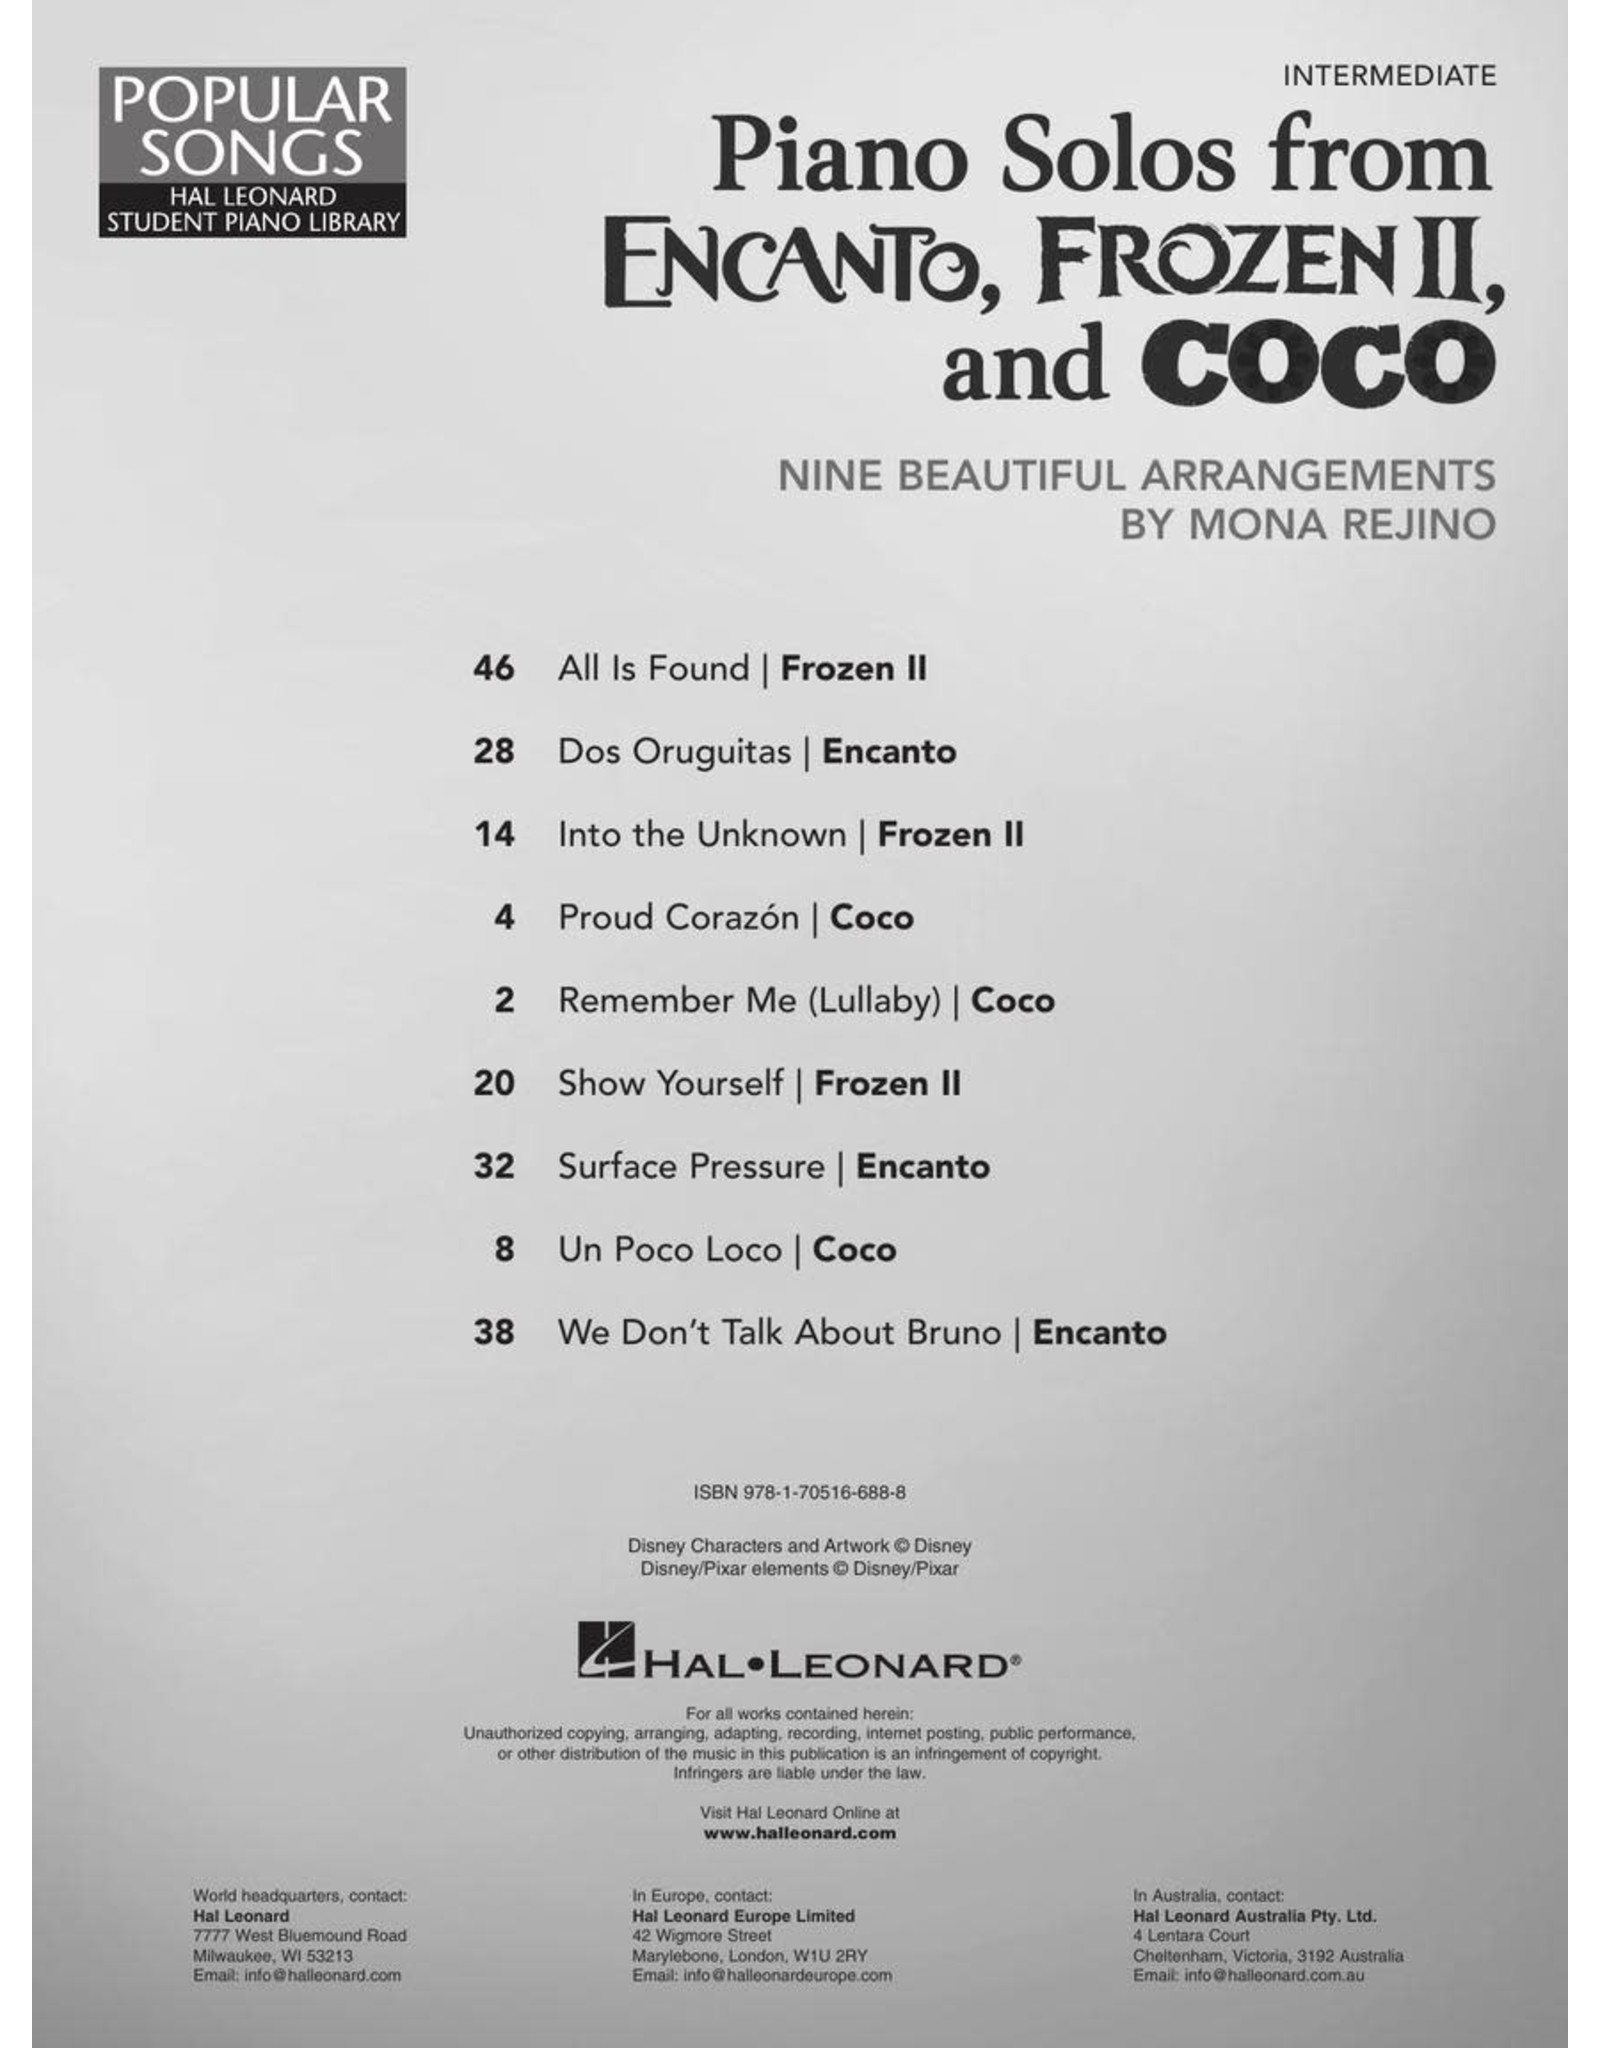 Hal Leonard Piano Solos from Encanto, Frozen II, and Coco - Intermediate Arrangements by Mona Rejino